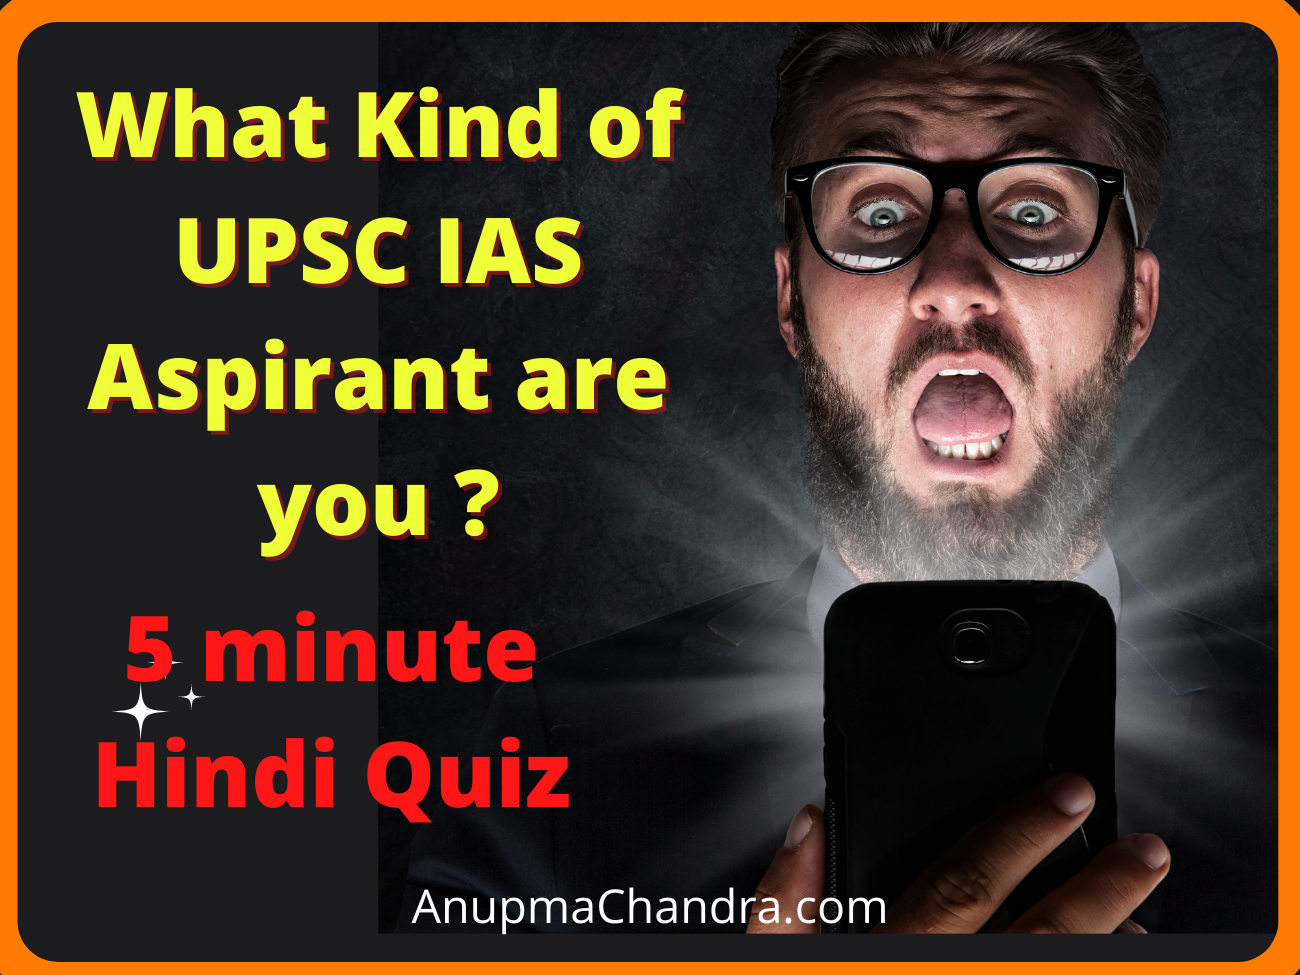 UPSC IAS Aspirant Mode quiz. What kind of aspirant are you?